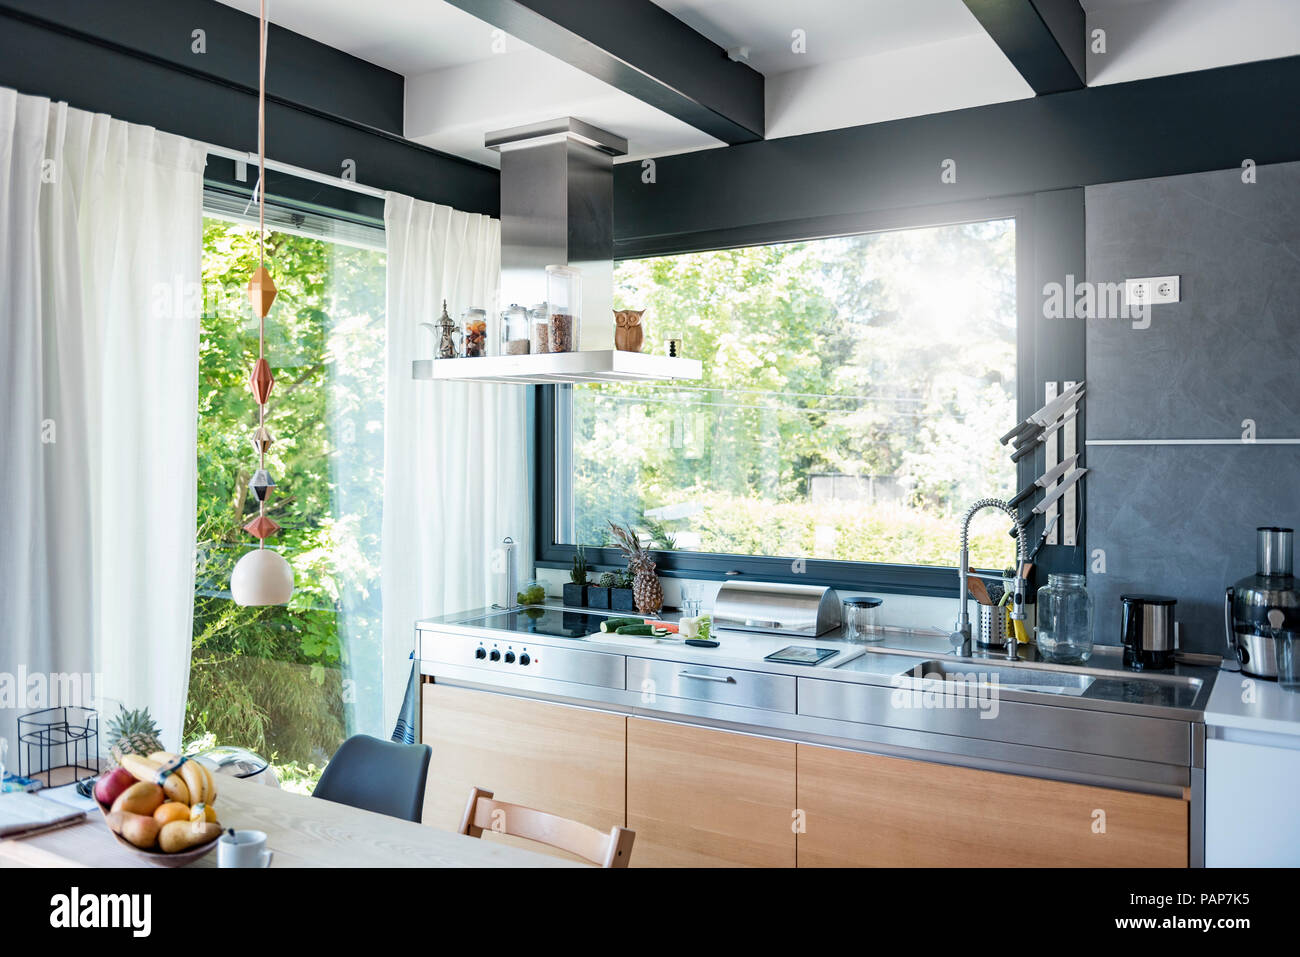 Interior of a modern kitchen Stock Photo